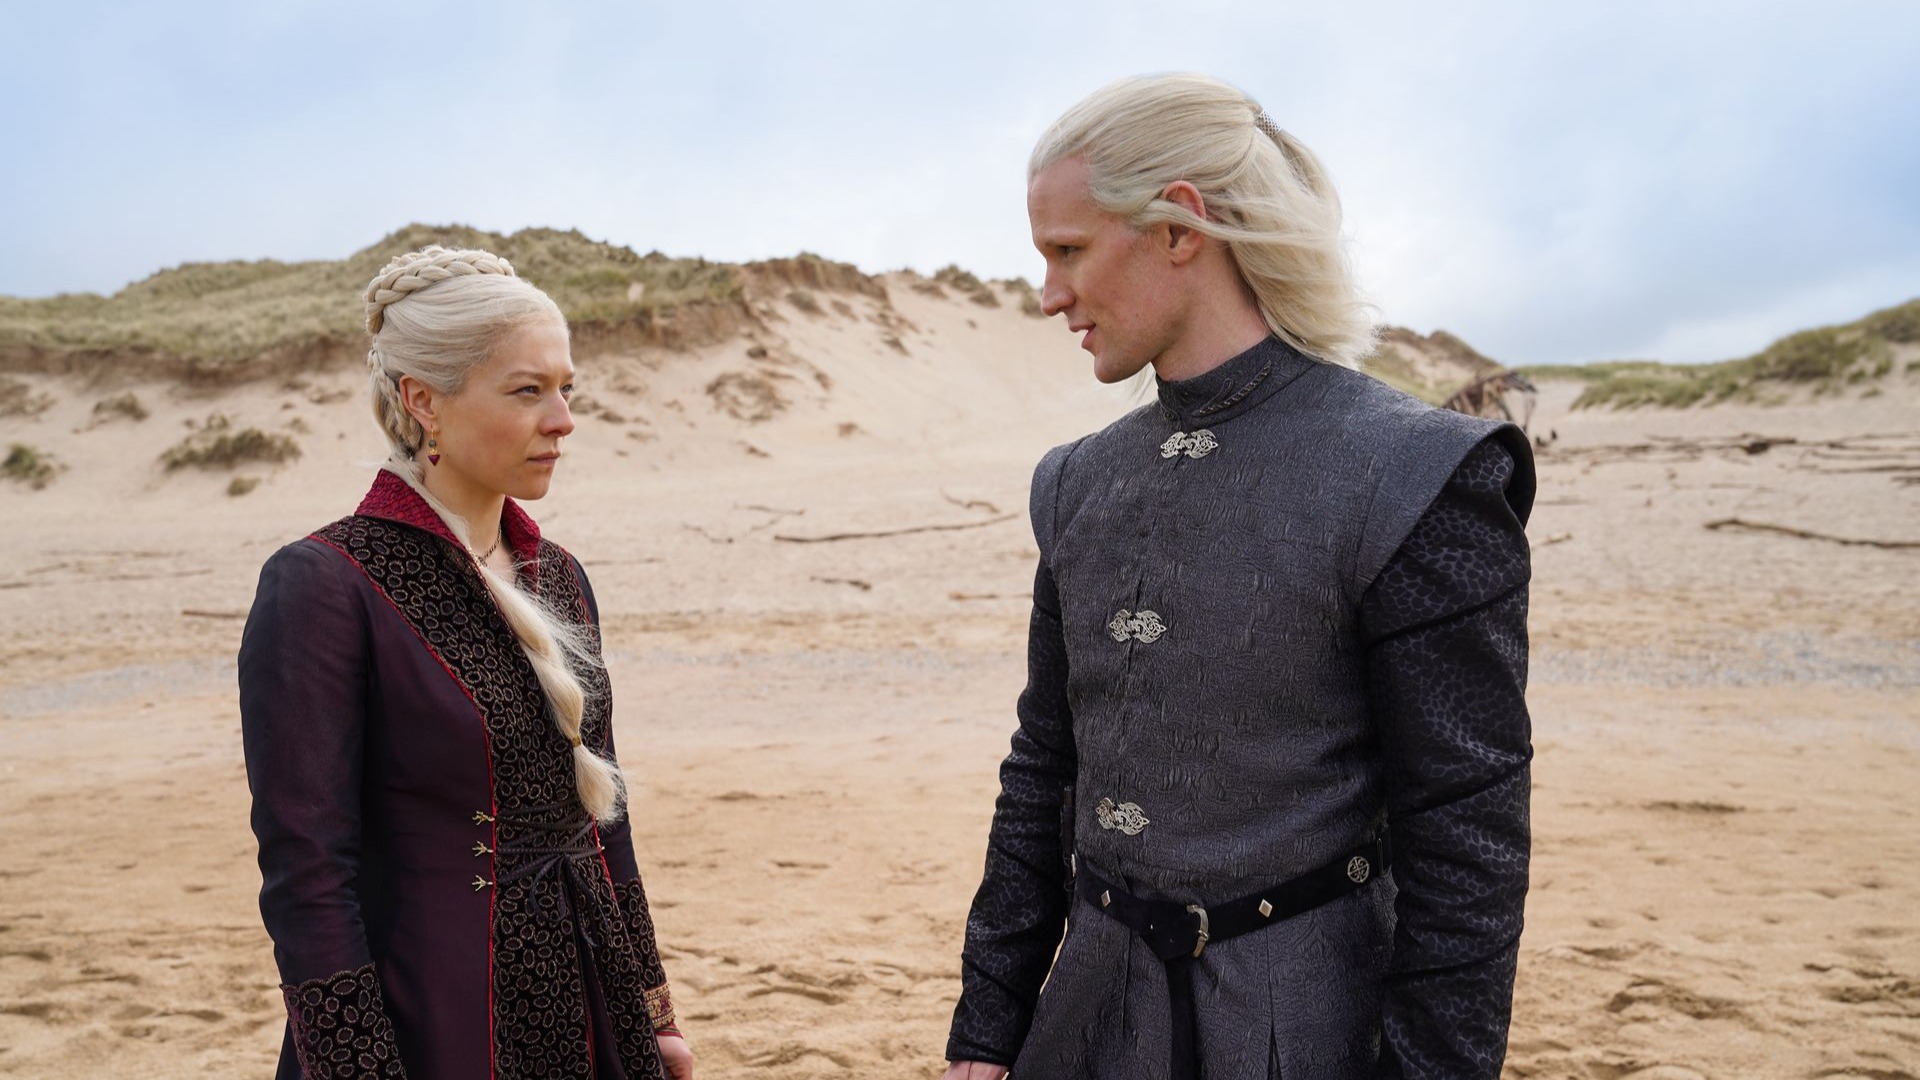 Rhaenyra y Daemon Targaryen conversan en una playa en House of the Dragon en HBO Max